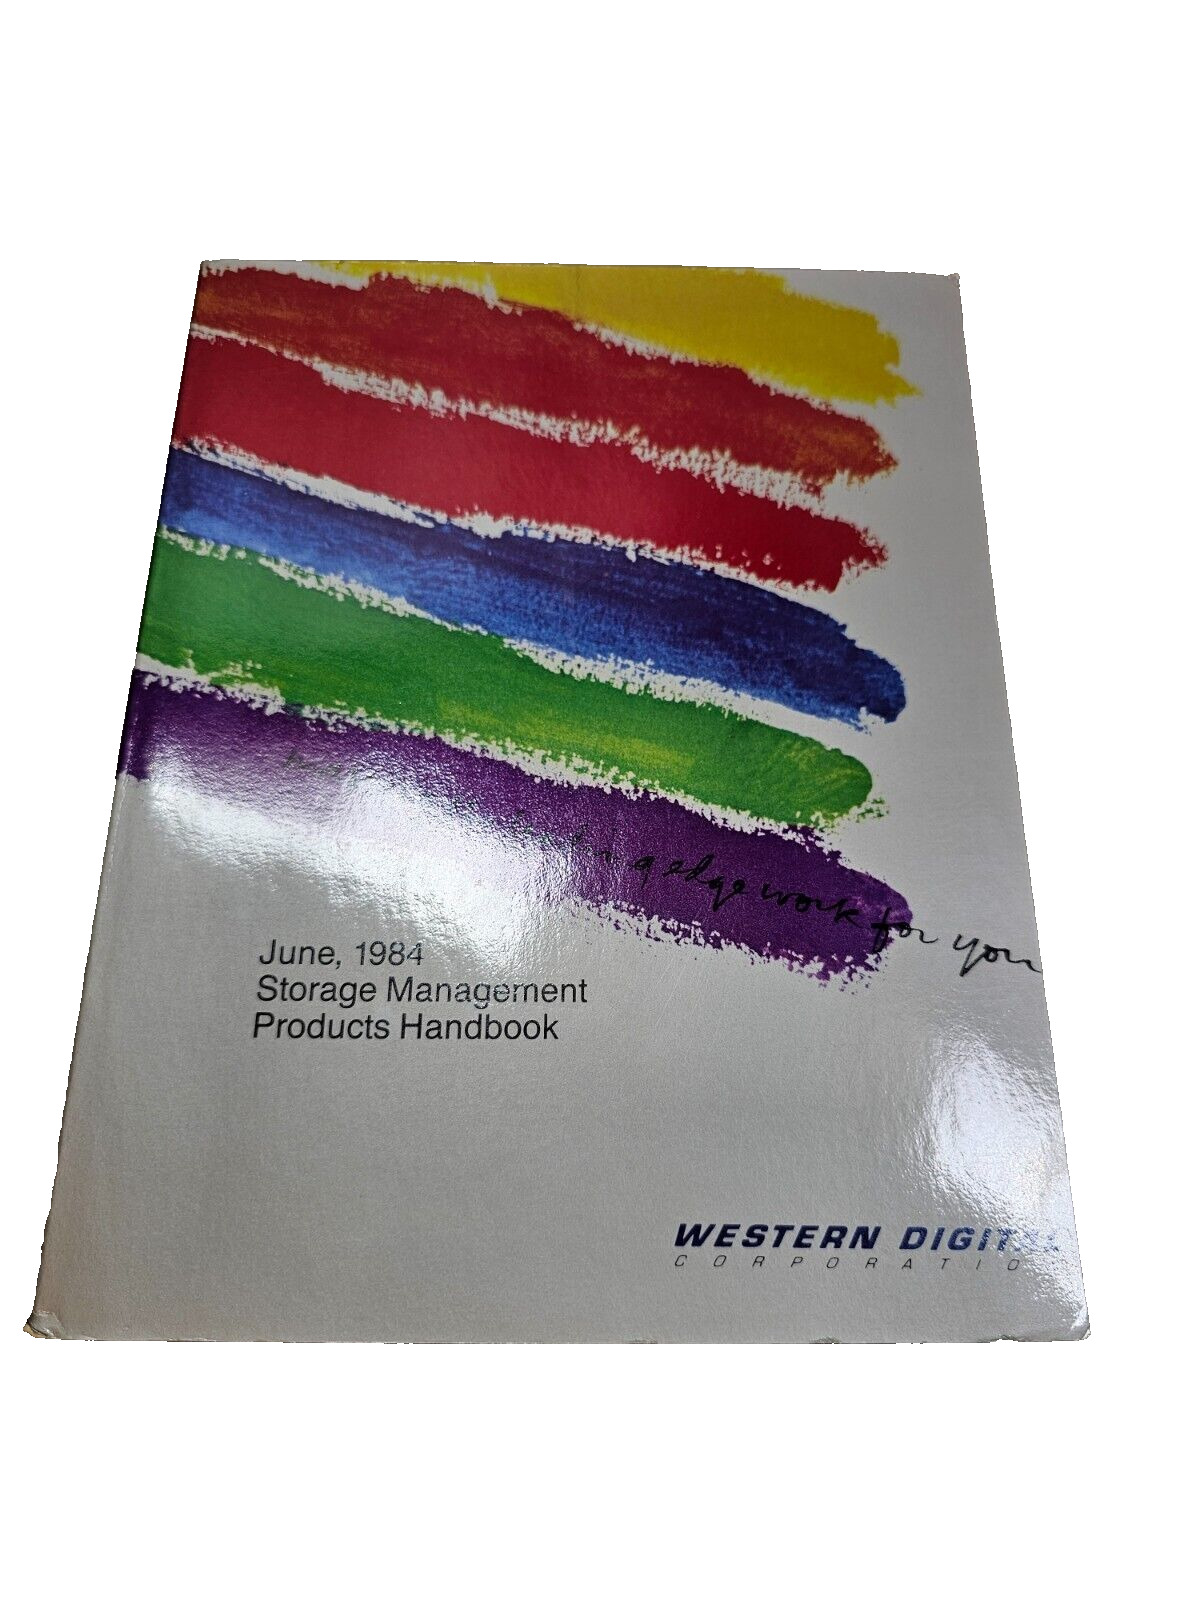 Rare Vintage Western Digital Storage Management Products Handbook, June 1984